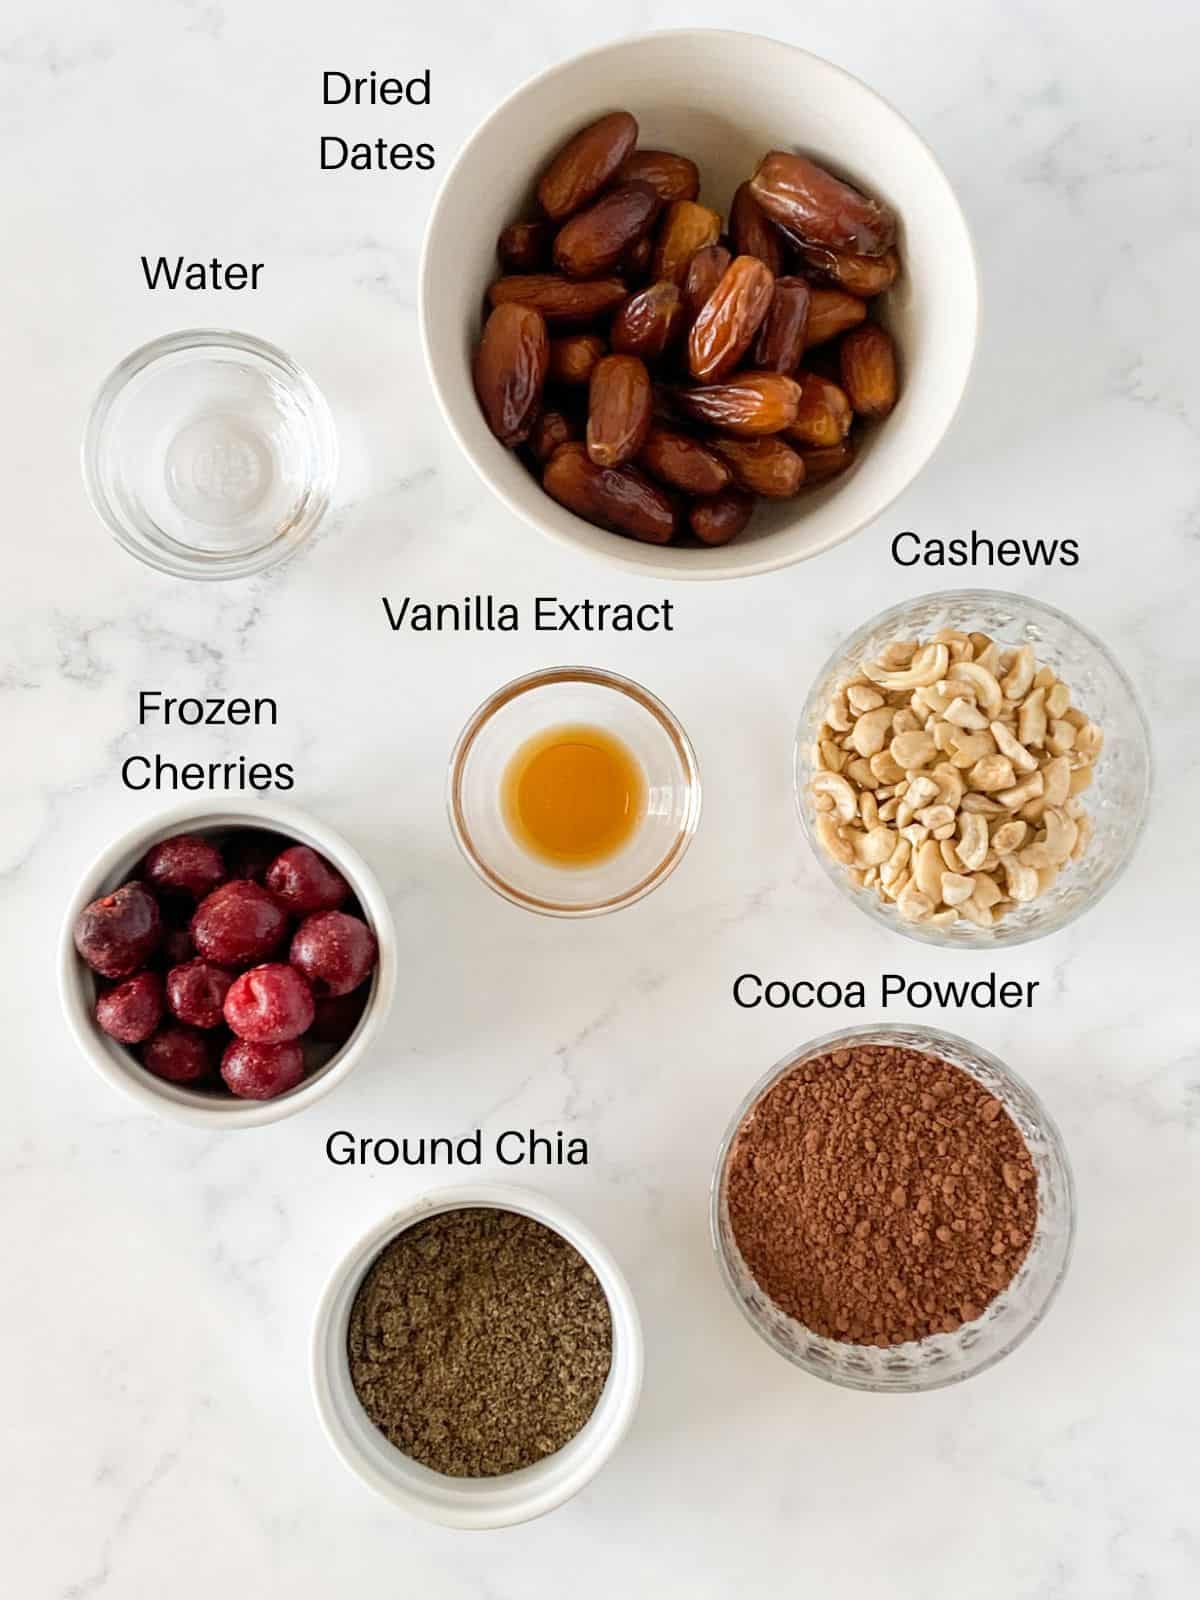 Cherry truffle ingredients.